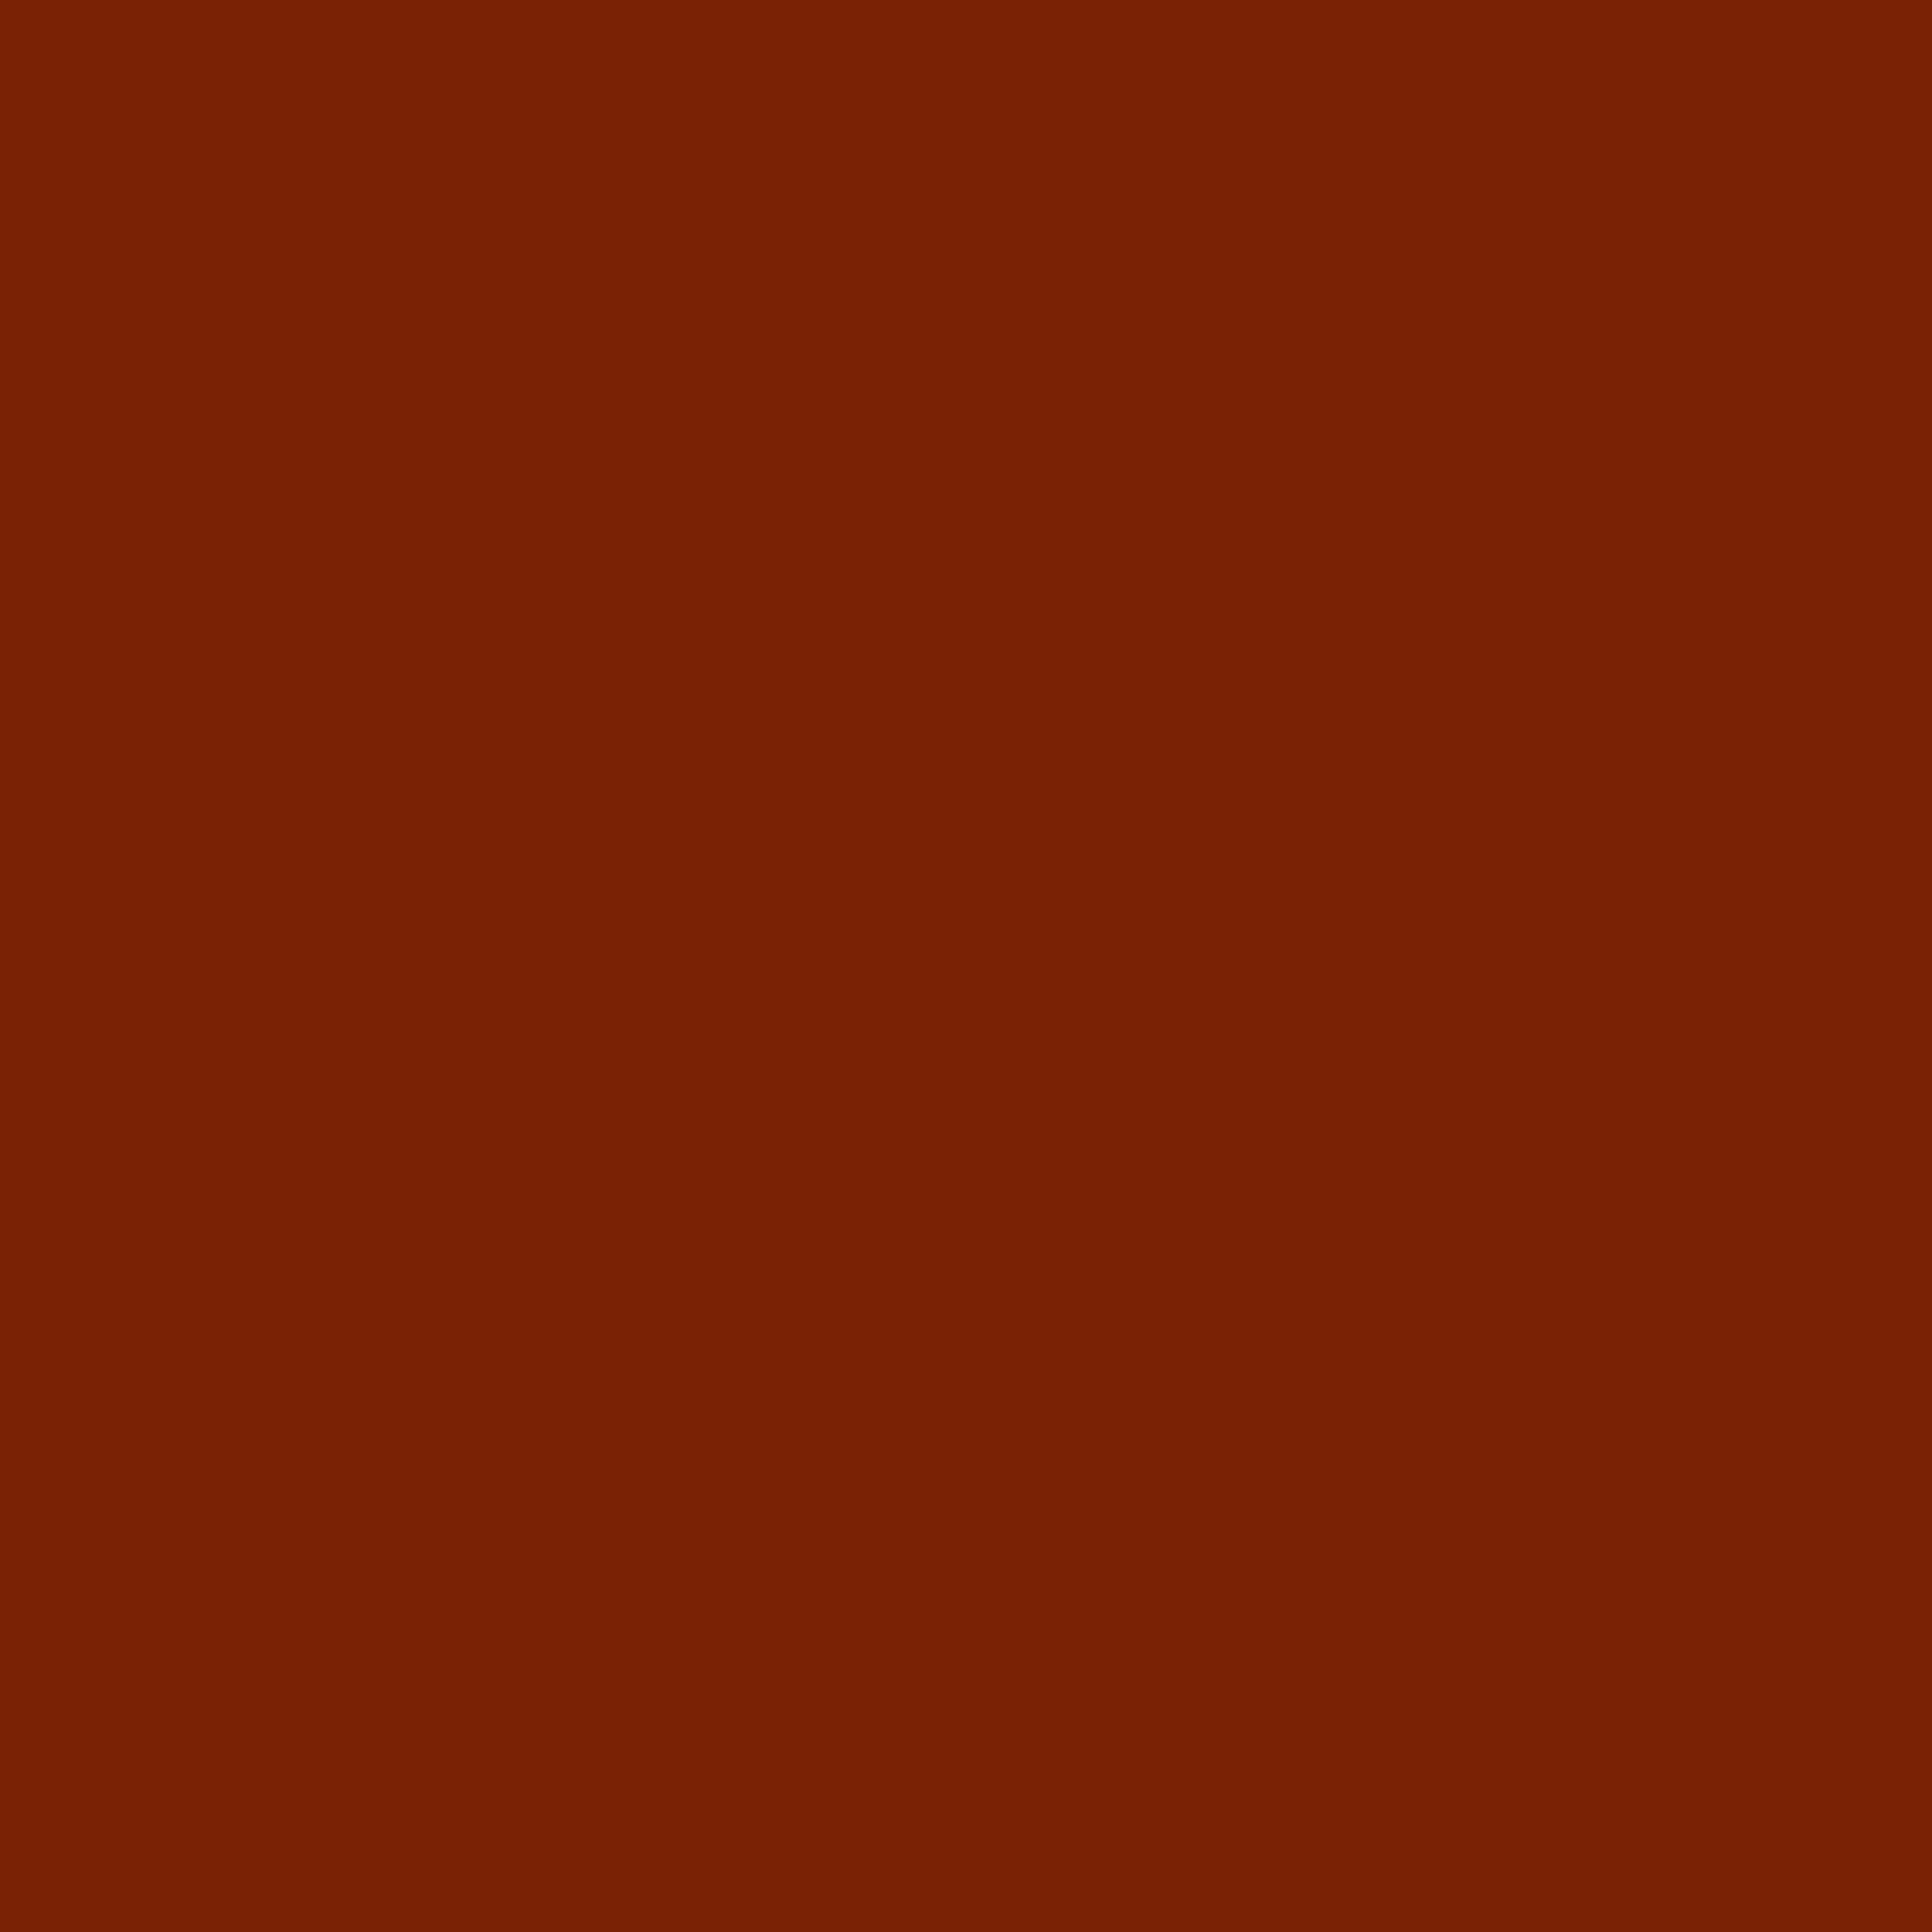 Wetterschutz-Holzfarbe 'Schwedenrot' rot 5 l + product picture